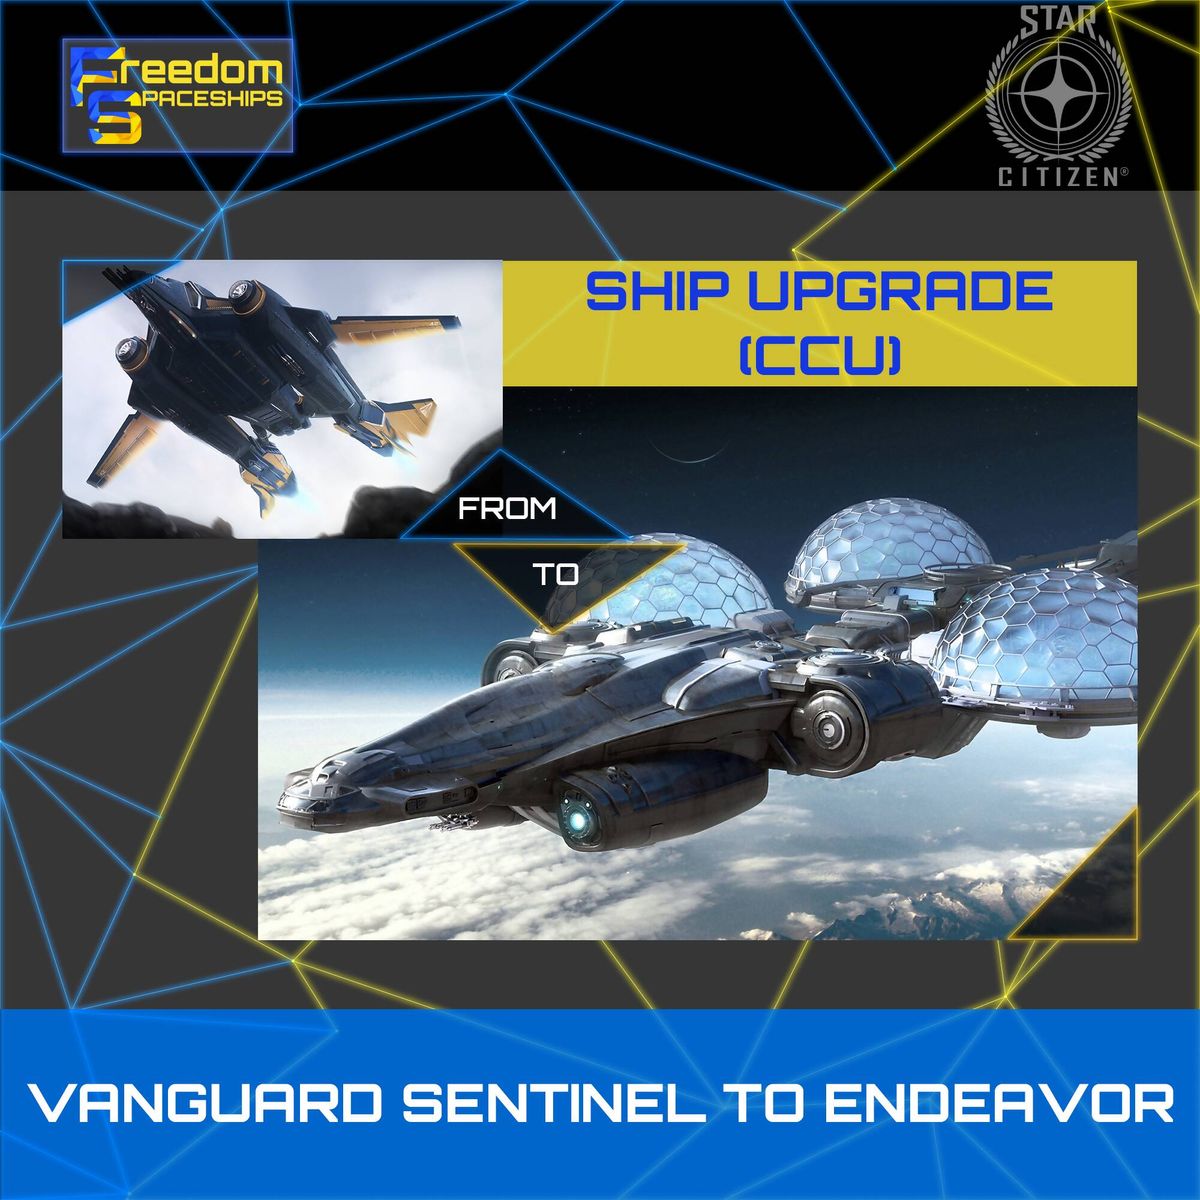 Upgrade - Vanguard Sentinel to Endeavor